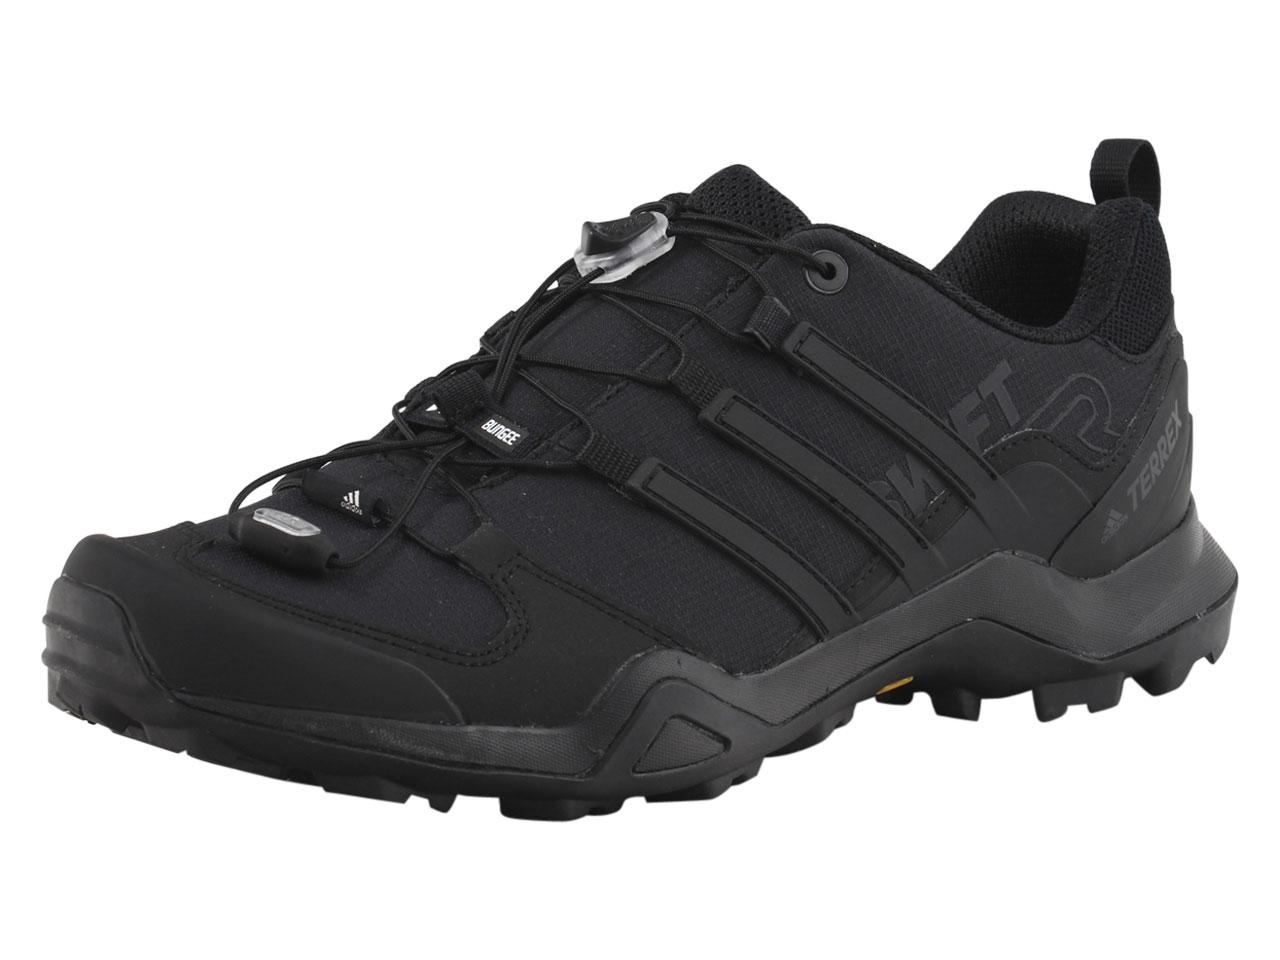 Adidas Men's Terrex Swift R2 Hiking Sneakers Shoes - Black/Black/Black - 9.5 D(M) US